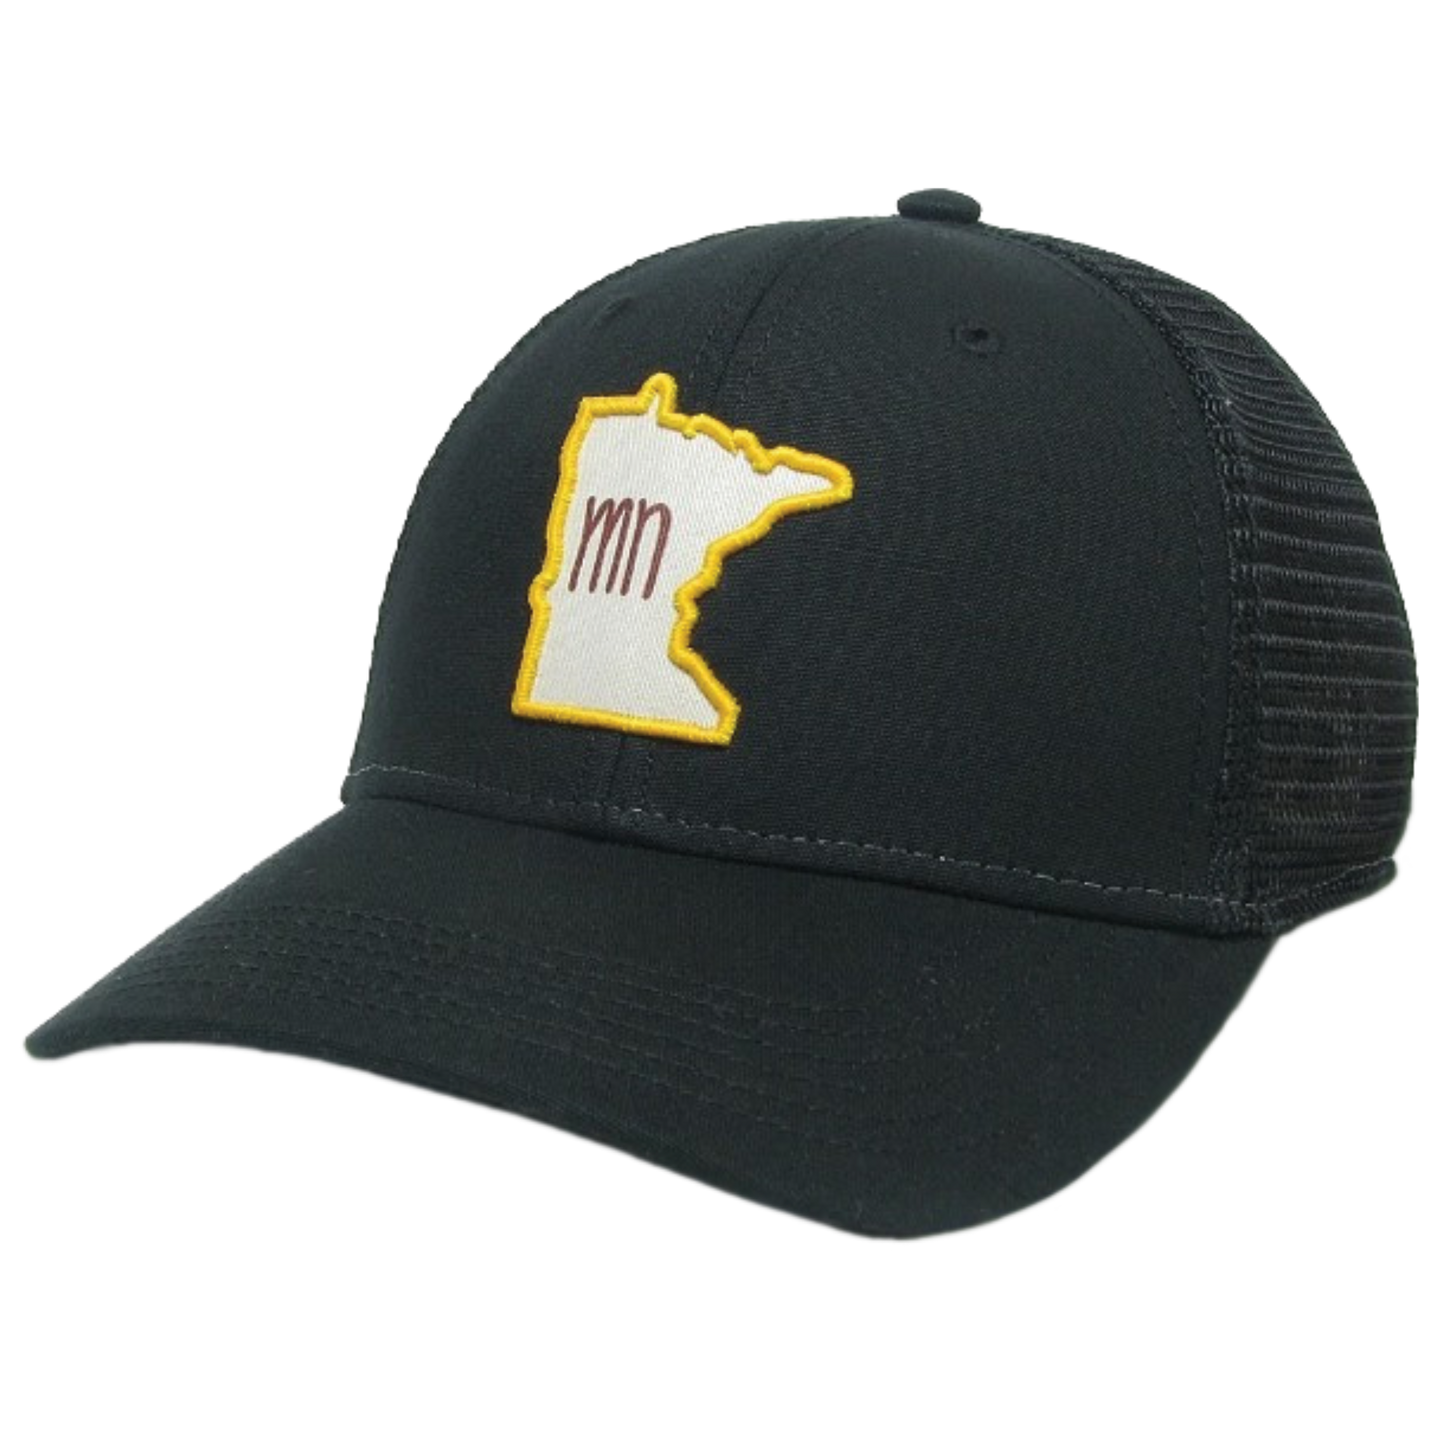 Minnesota Mid-Pro Trucker Hat in Black/Black